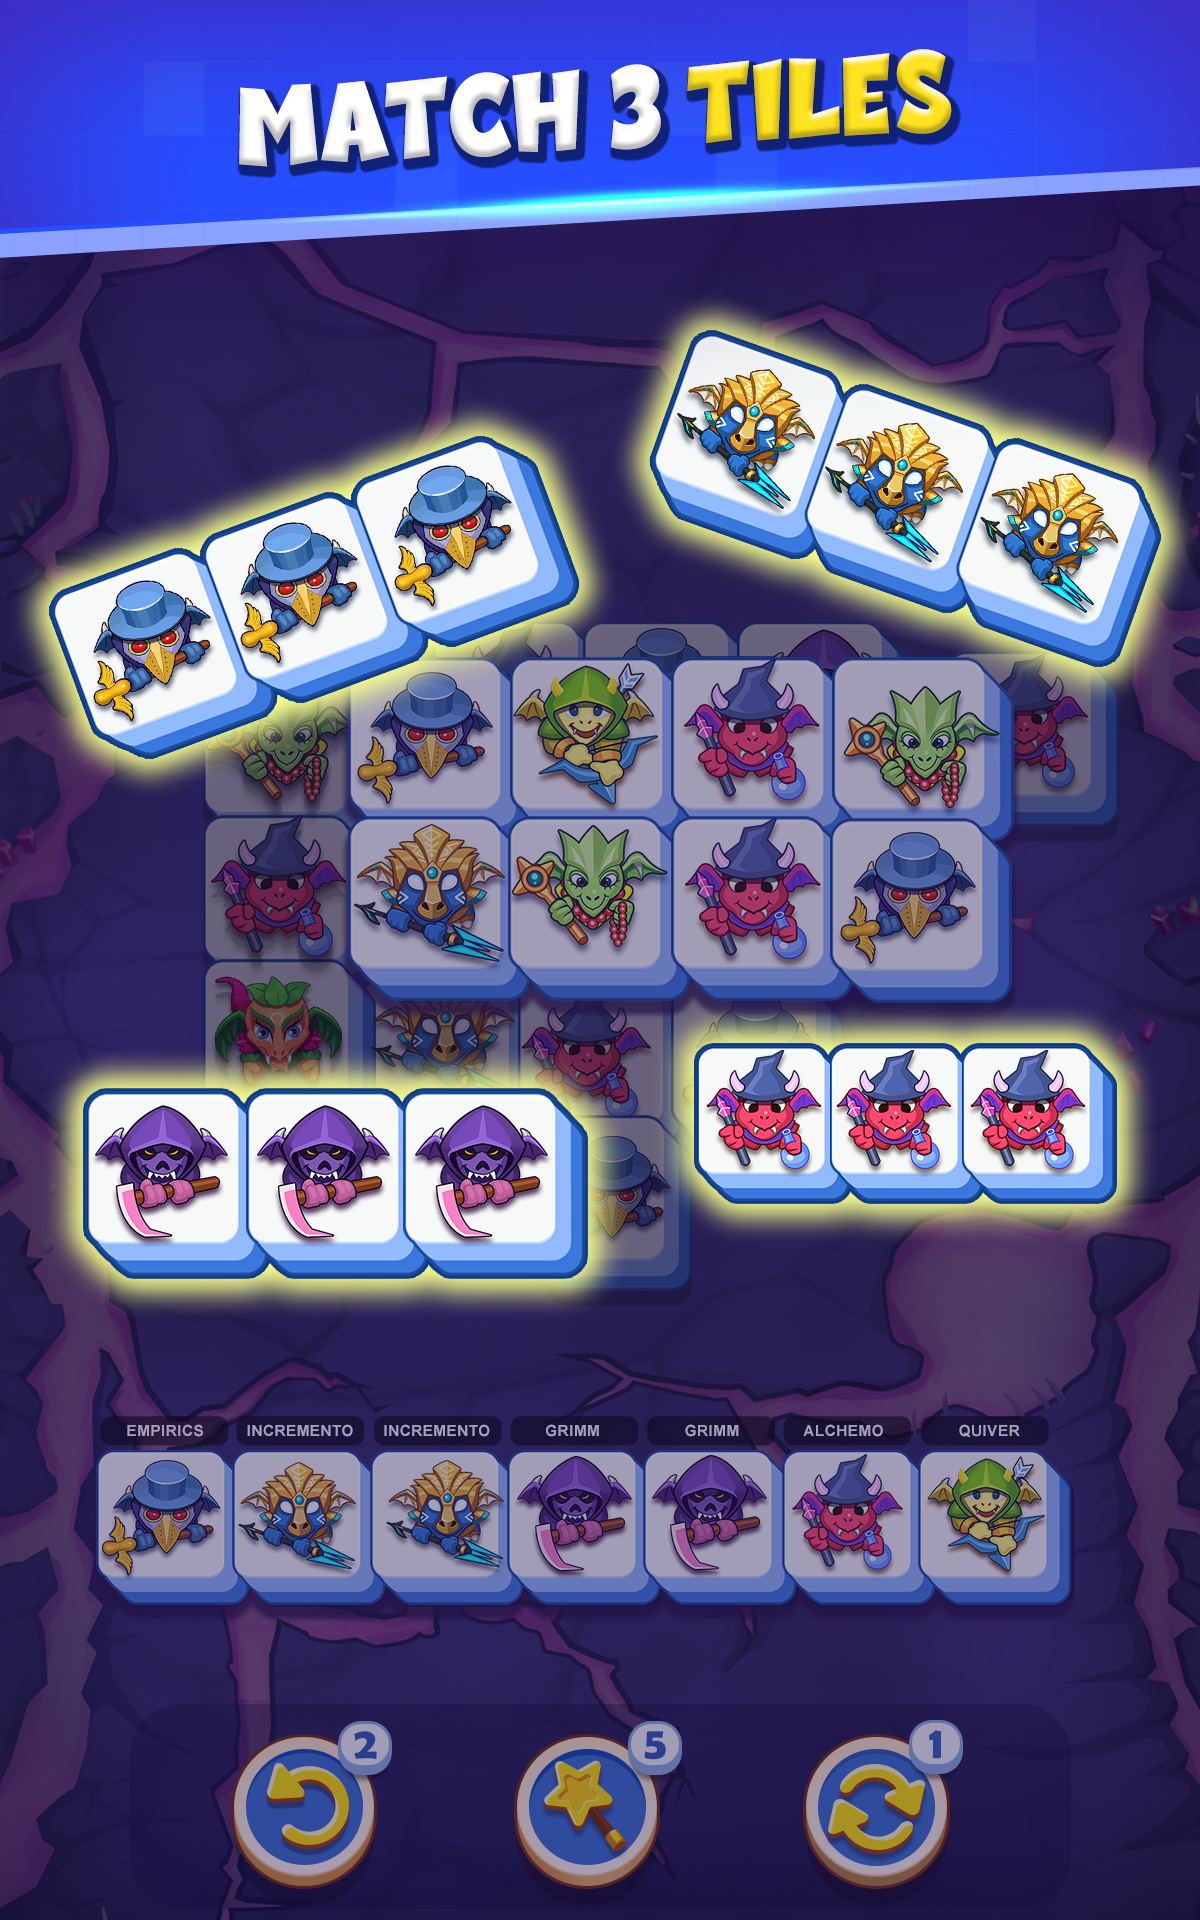 Puzzle Dragons : Tile Match screenshot game